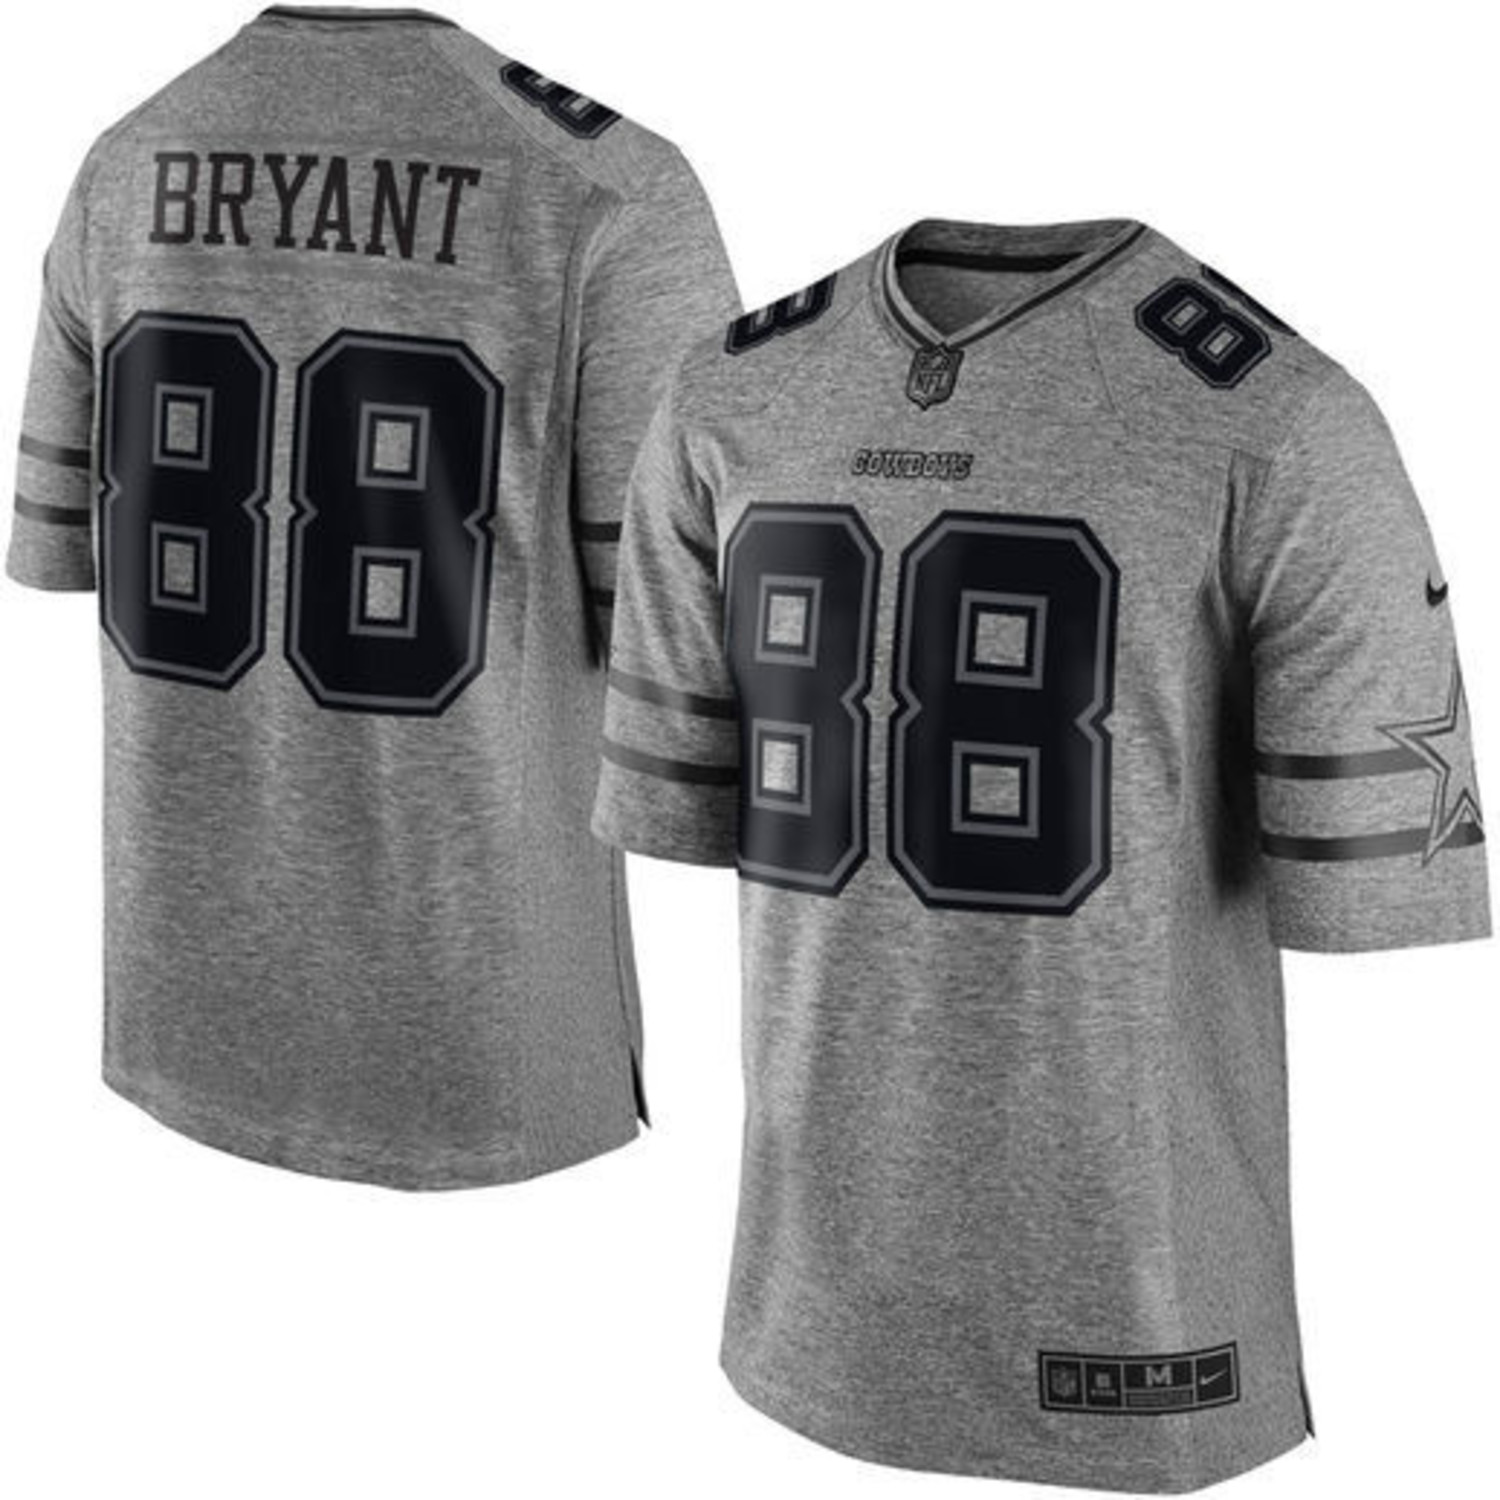 dez bryant jersey stitched